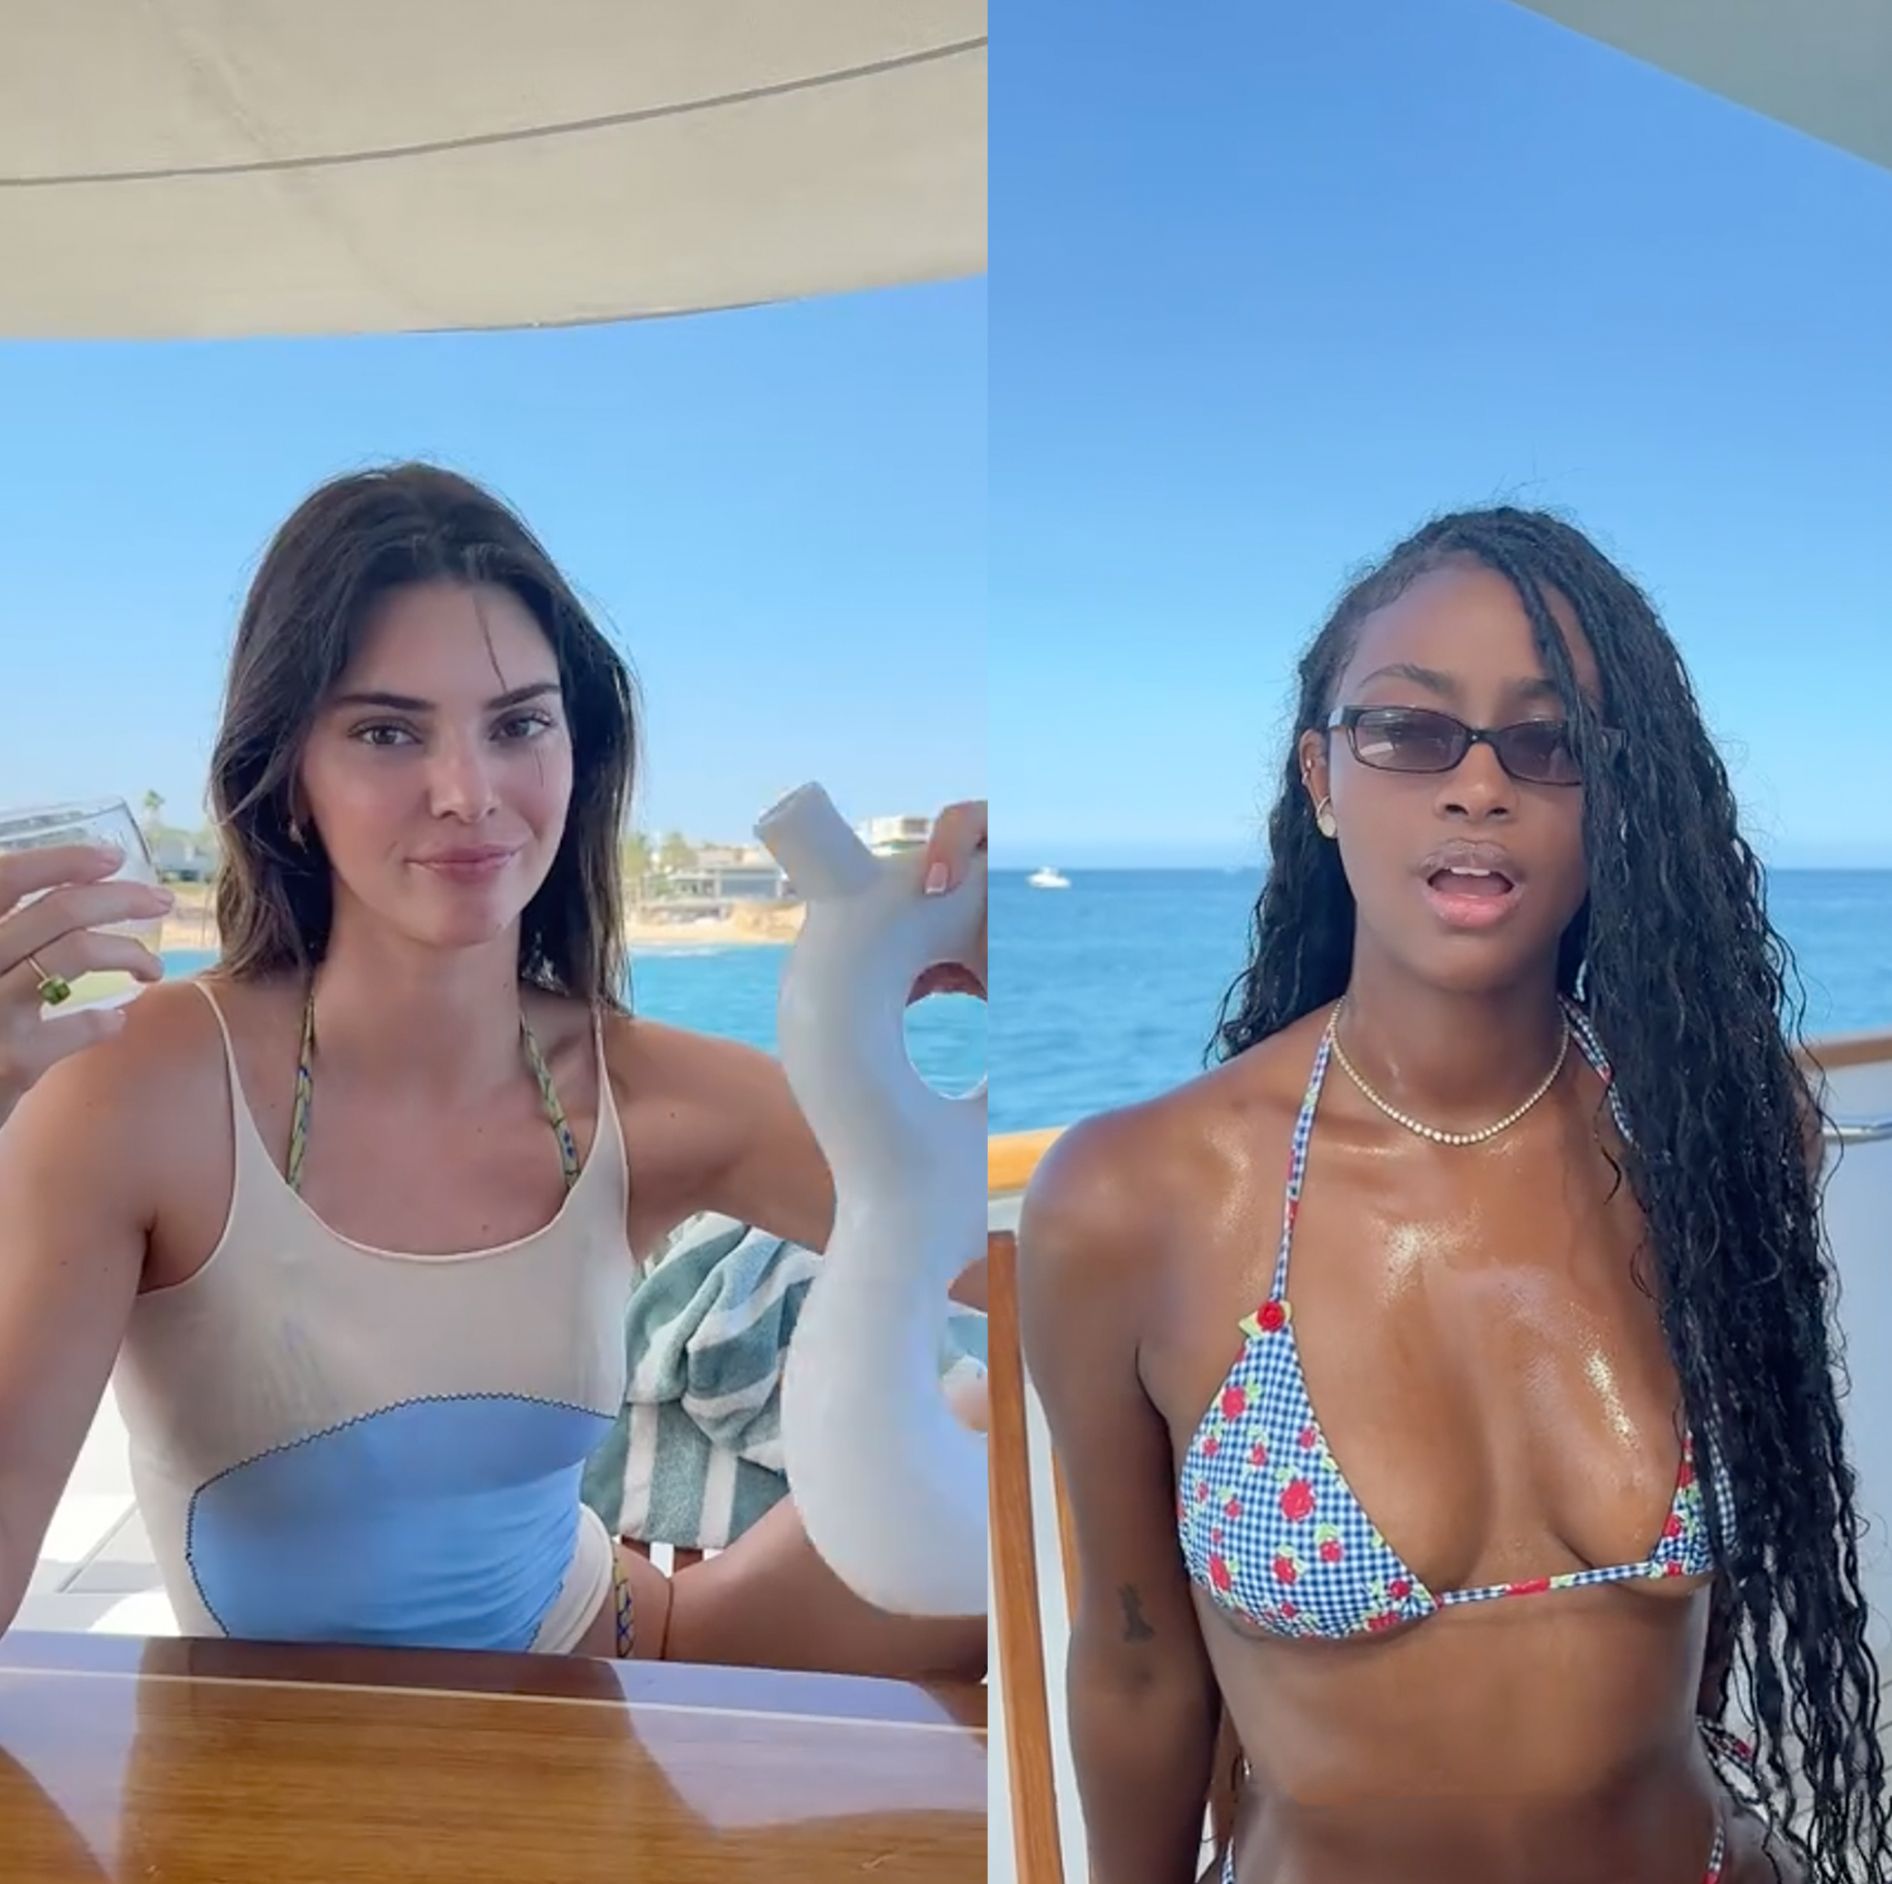 Kendall Jenner, Justine Skye, Lori Harvey, and Hailey Bieber Enjoy a Girls' Yacht Day in String Bikinis